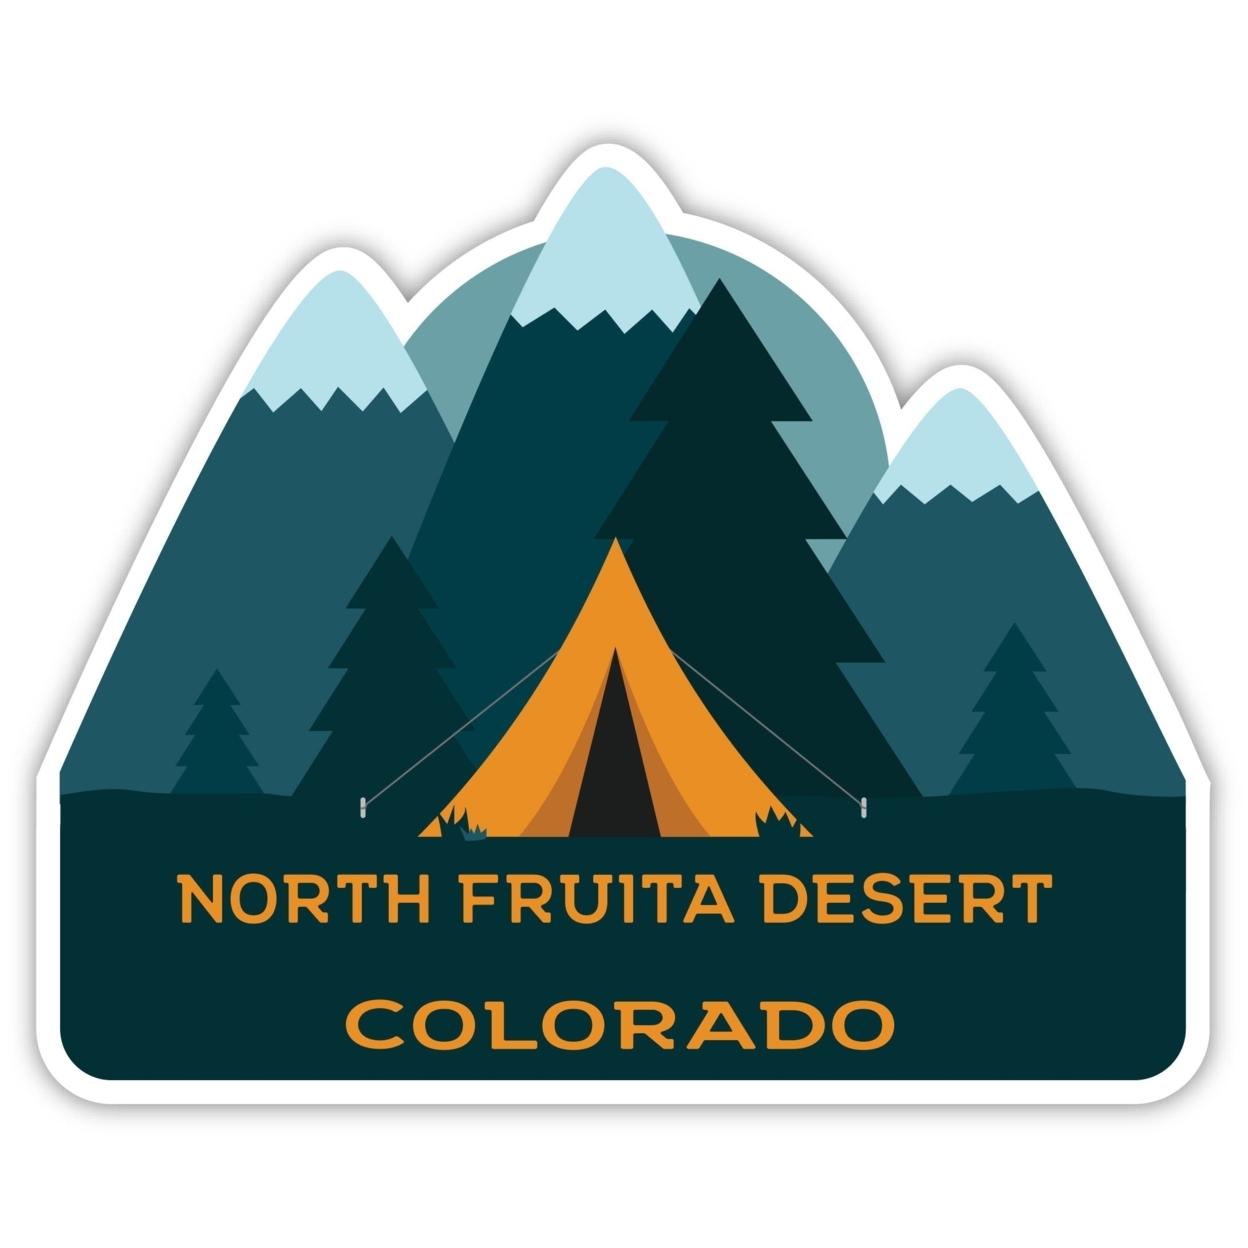 North Fruita Desert Colorado Souvenir Decorative Stickers (Choose Theme And Size) - Single Unit, 4-Inch, Tent